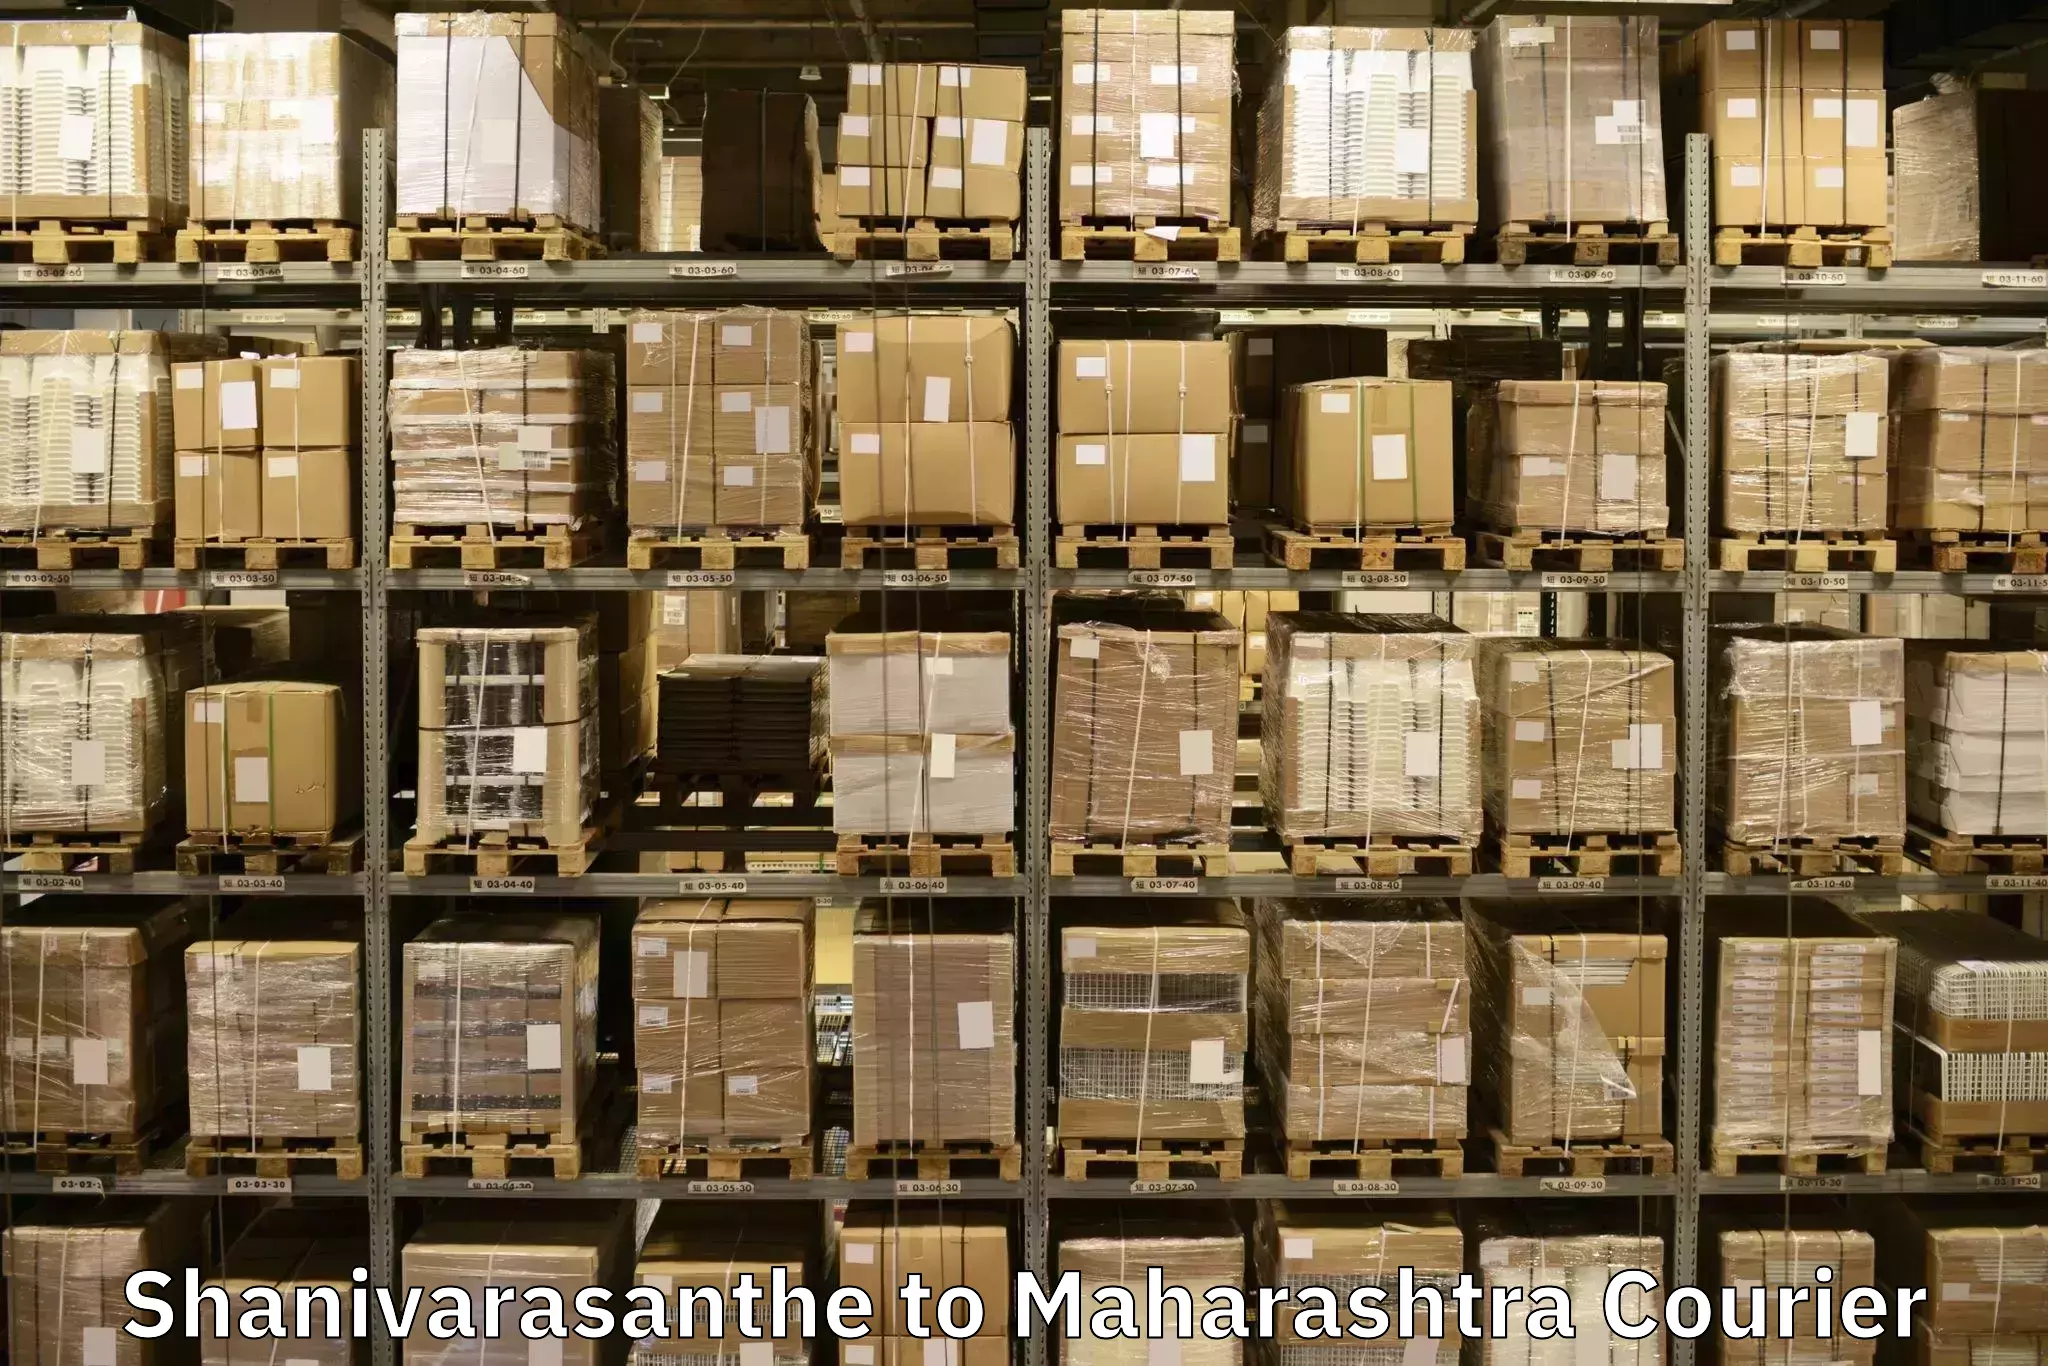 Moving and storage services Shanivarasanthe to Koregaon